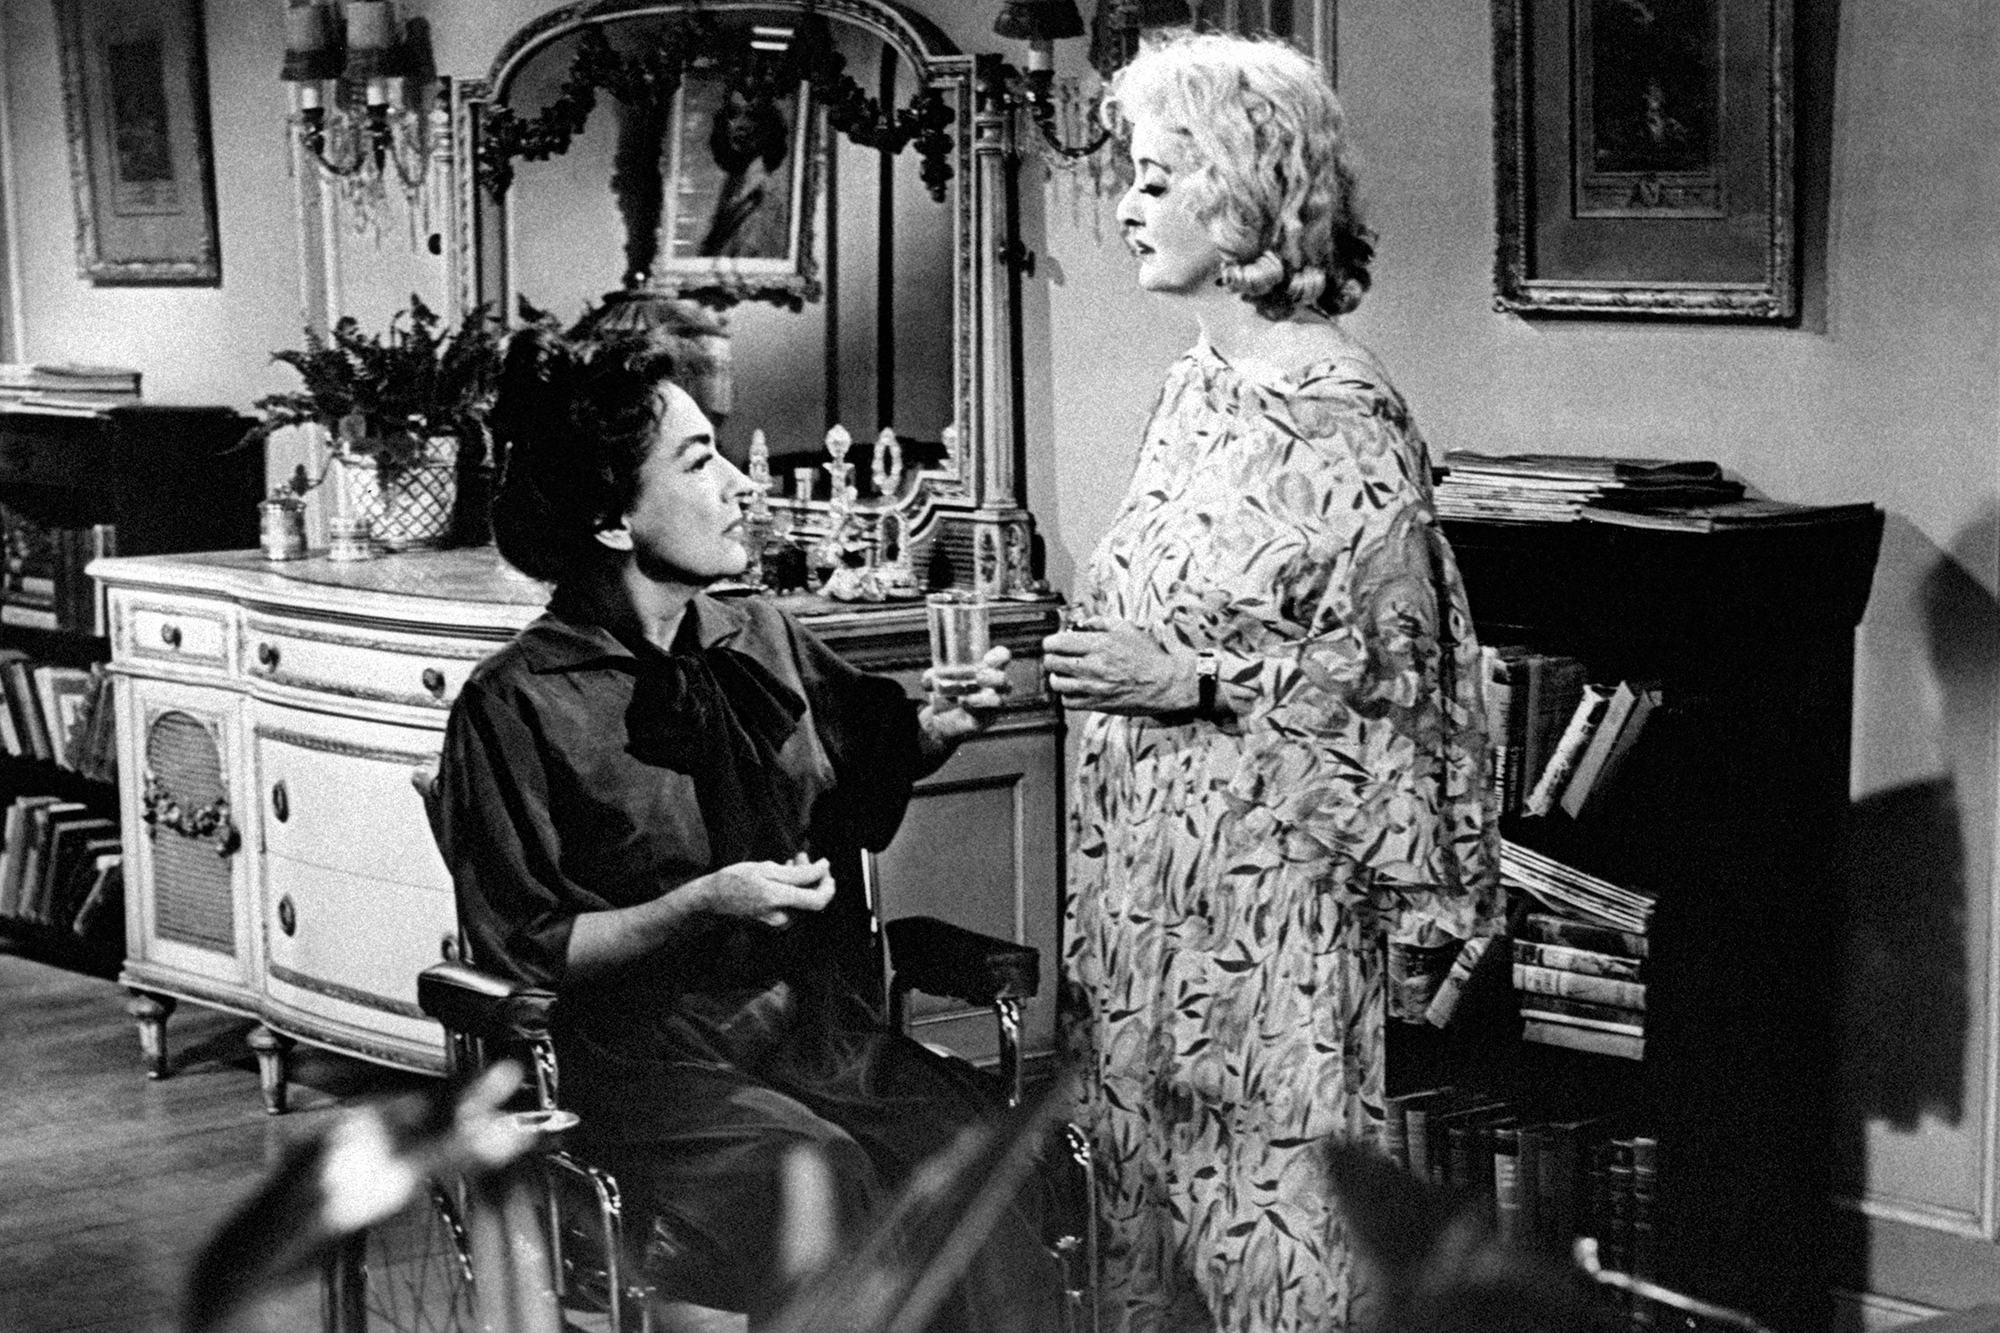 Joan Crawford and Bette Davis chatting